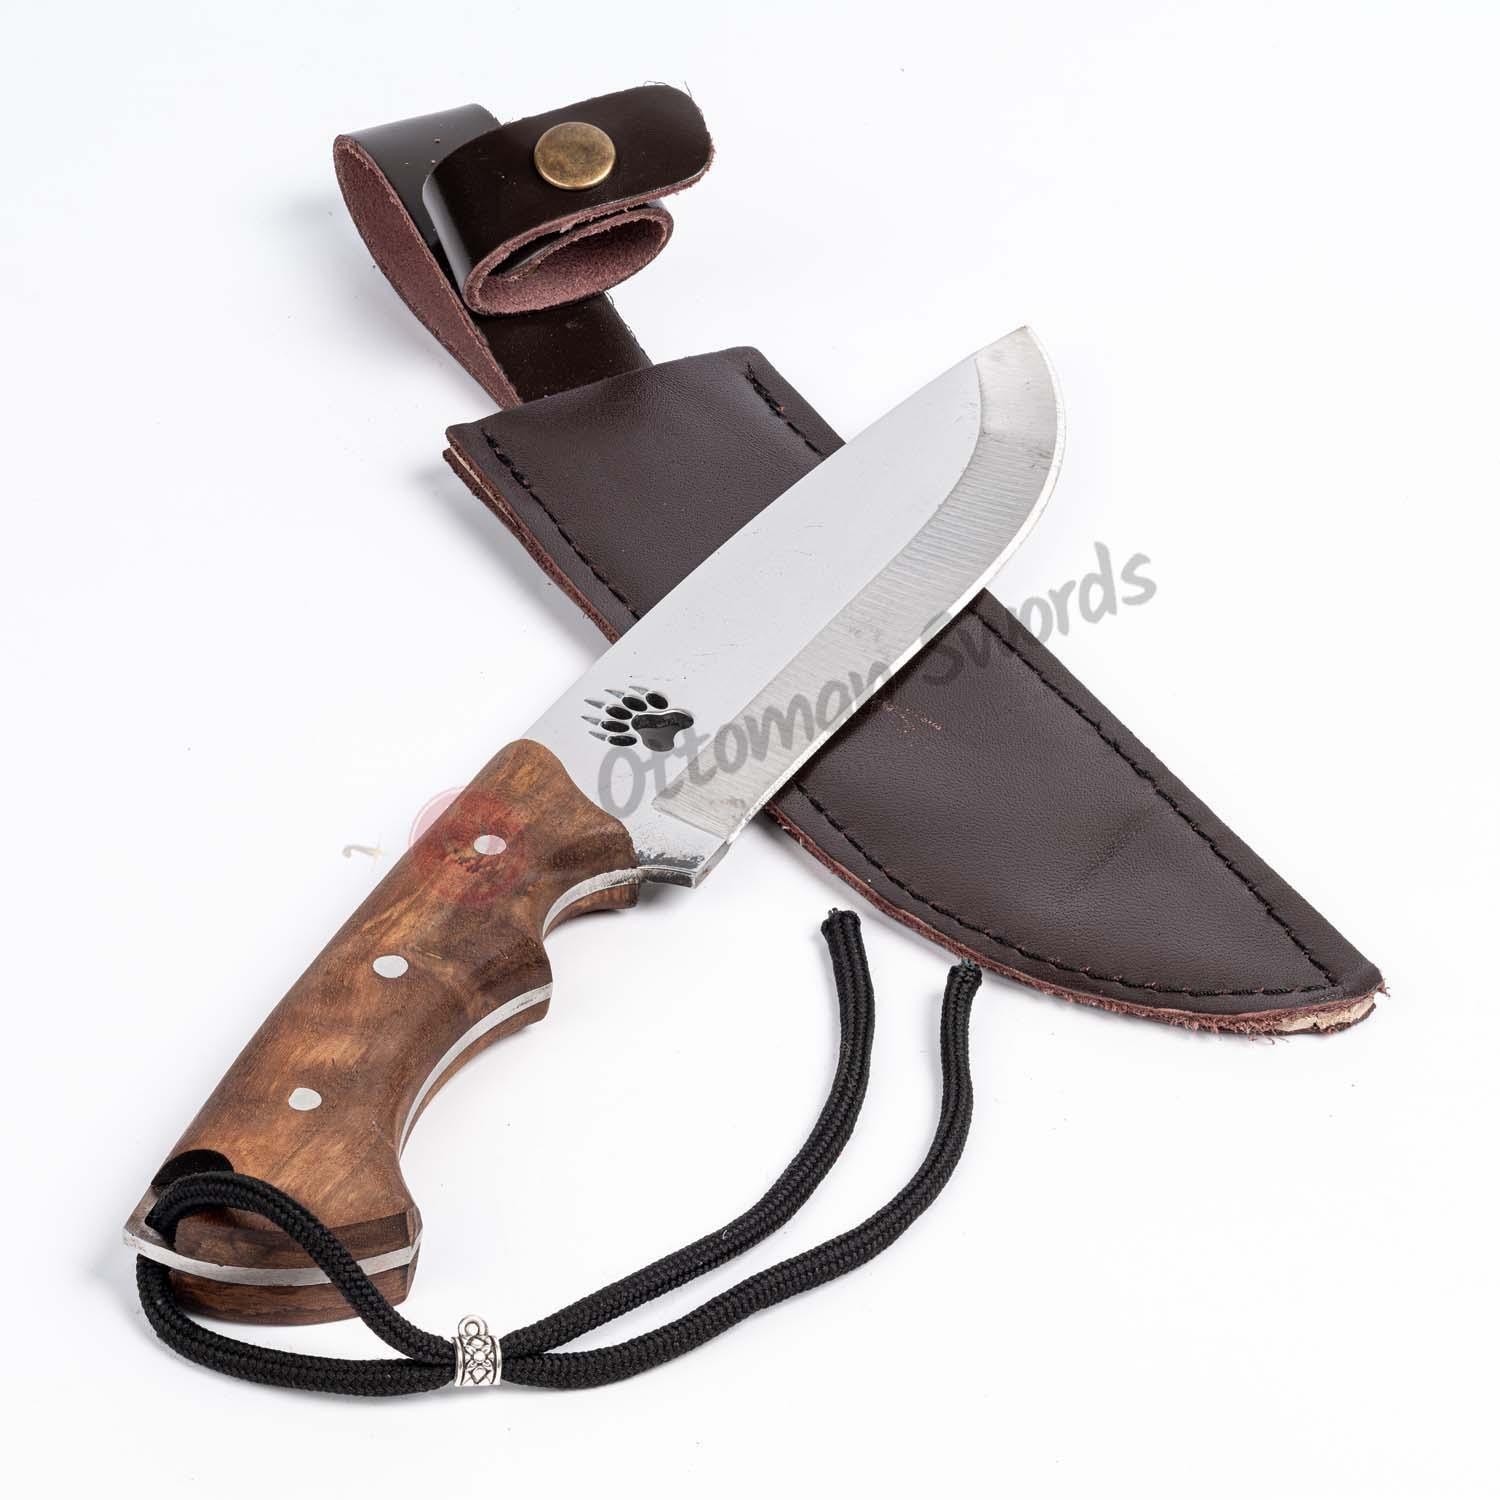 Bushcraft Knife With Walnut Handle and Bear Paw (2)